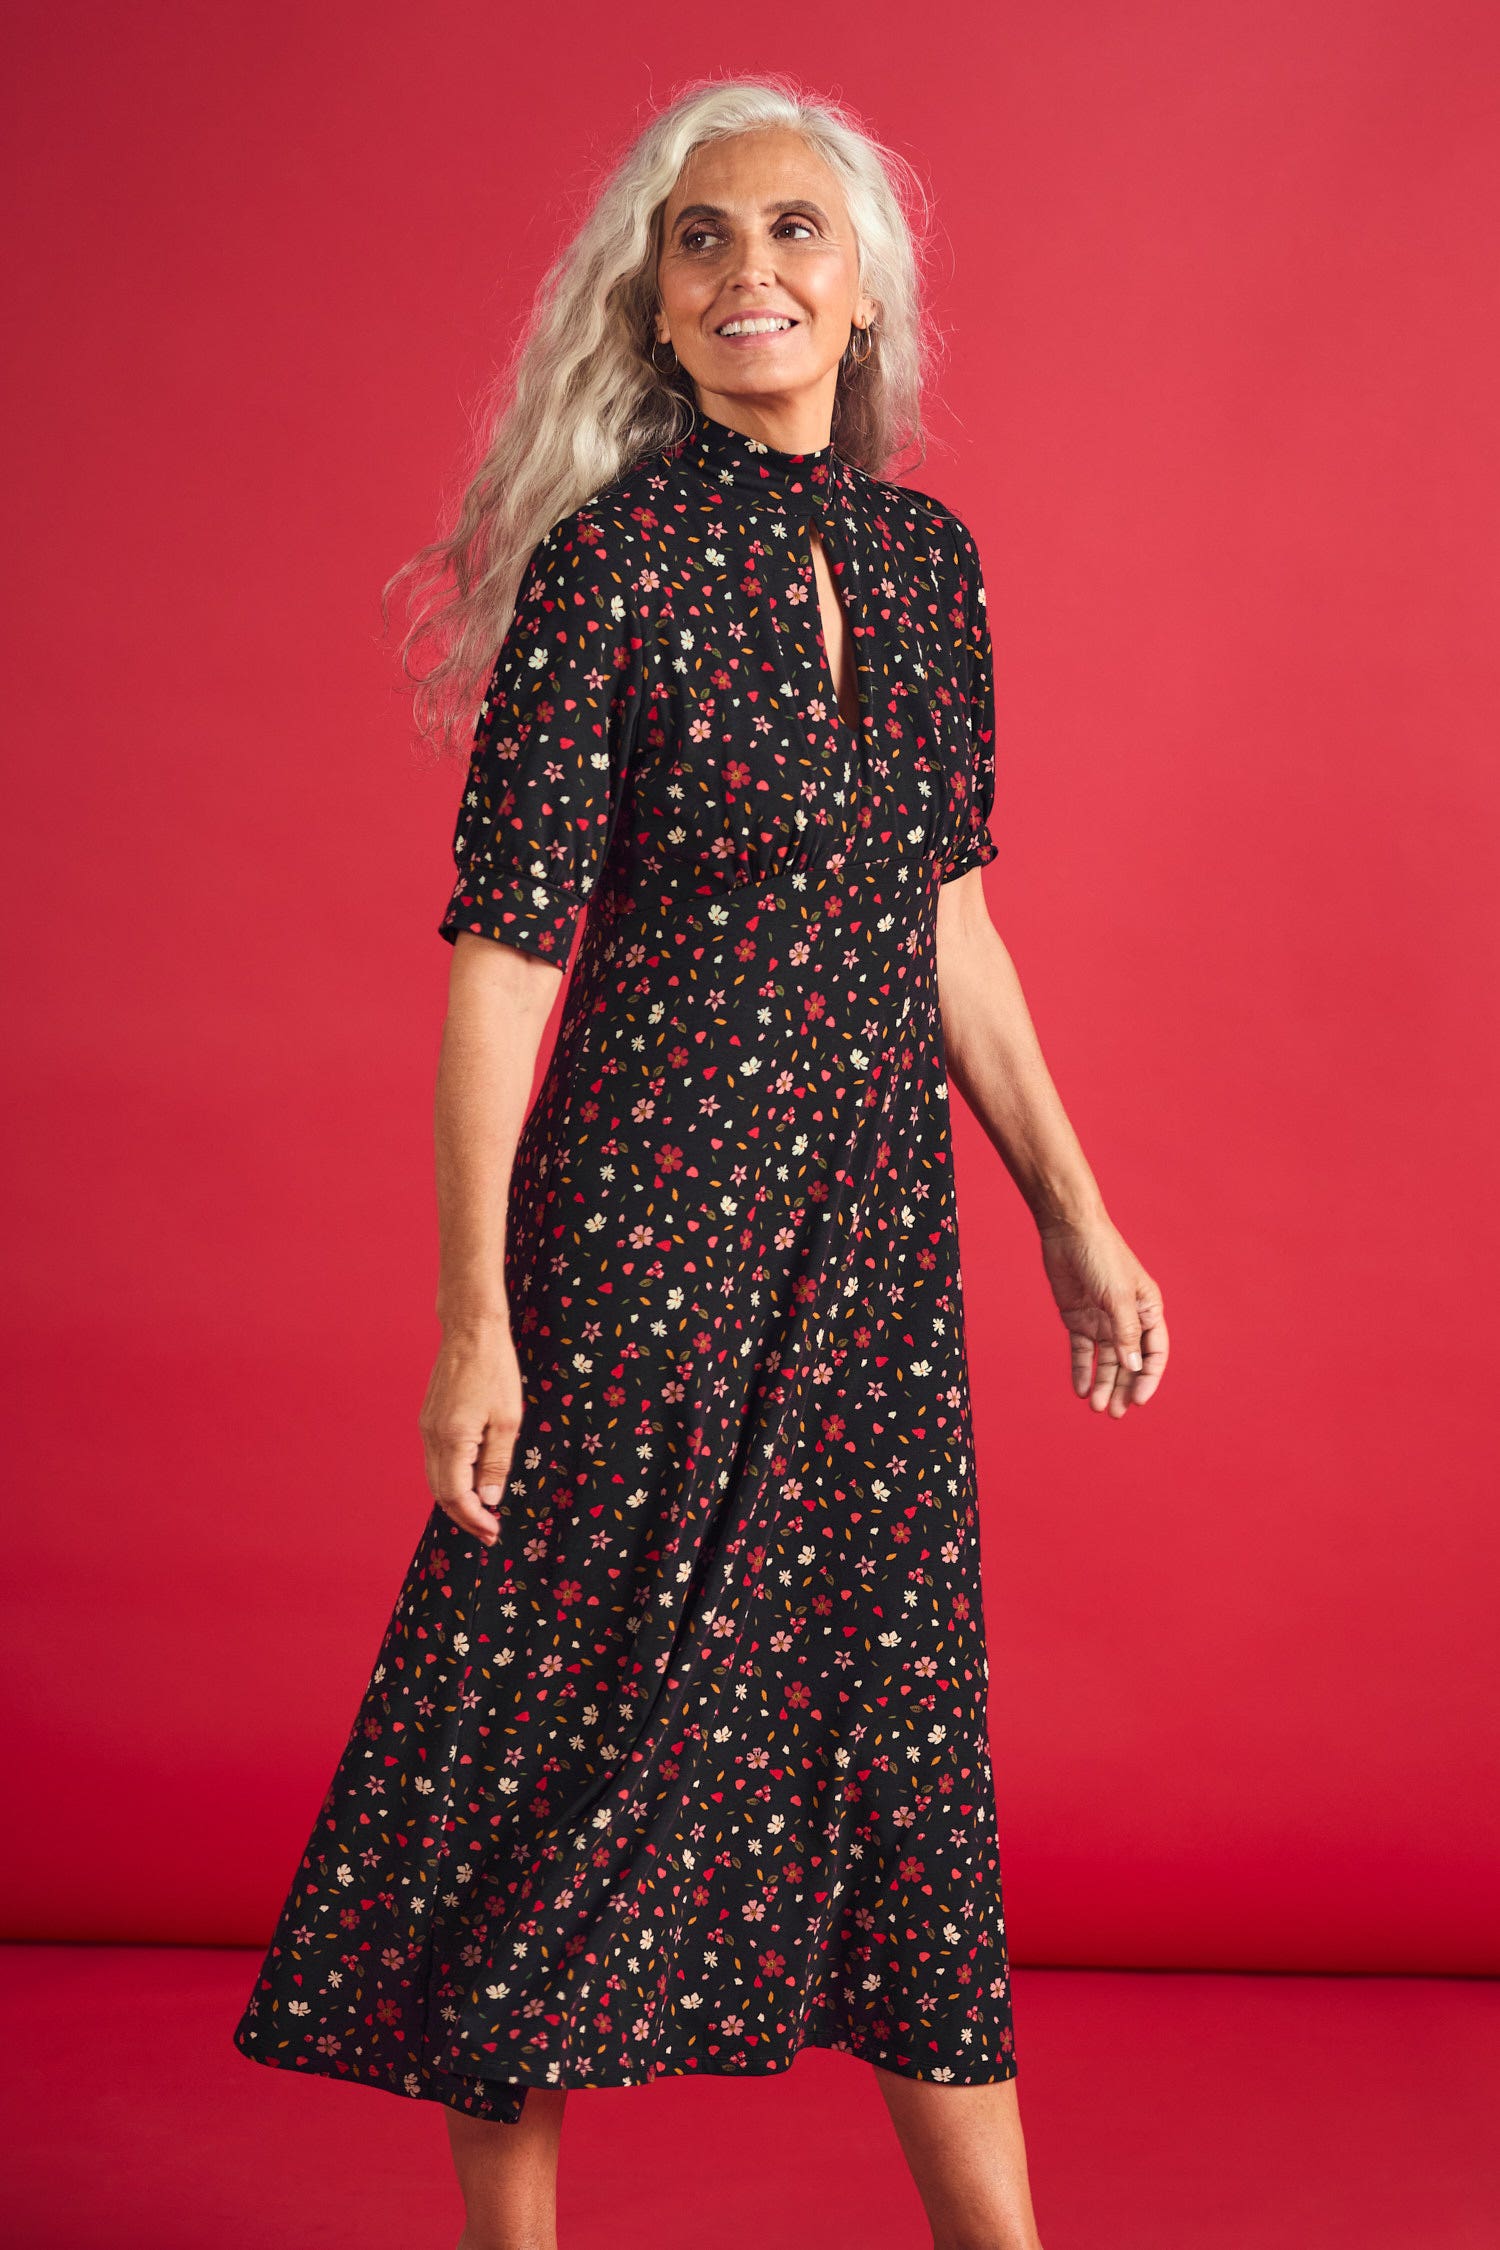 Sleeveless Polka Dot Print Dress, Made in Canada, L'Atelier